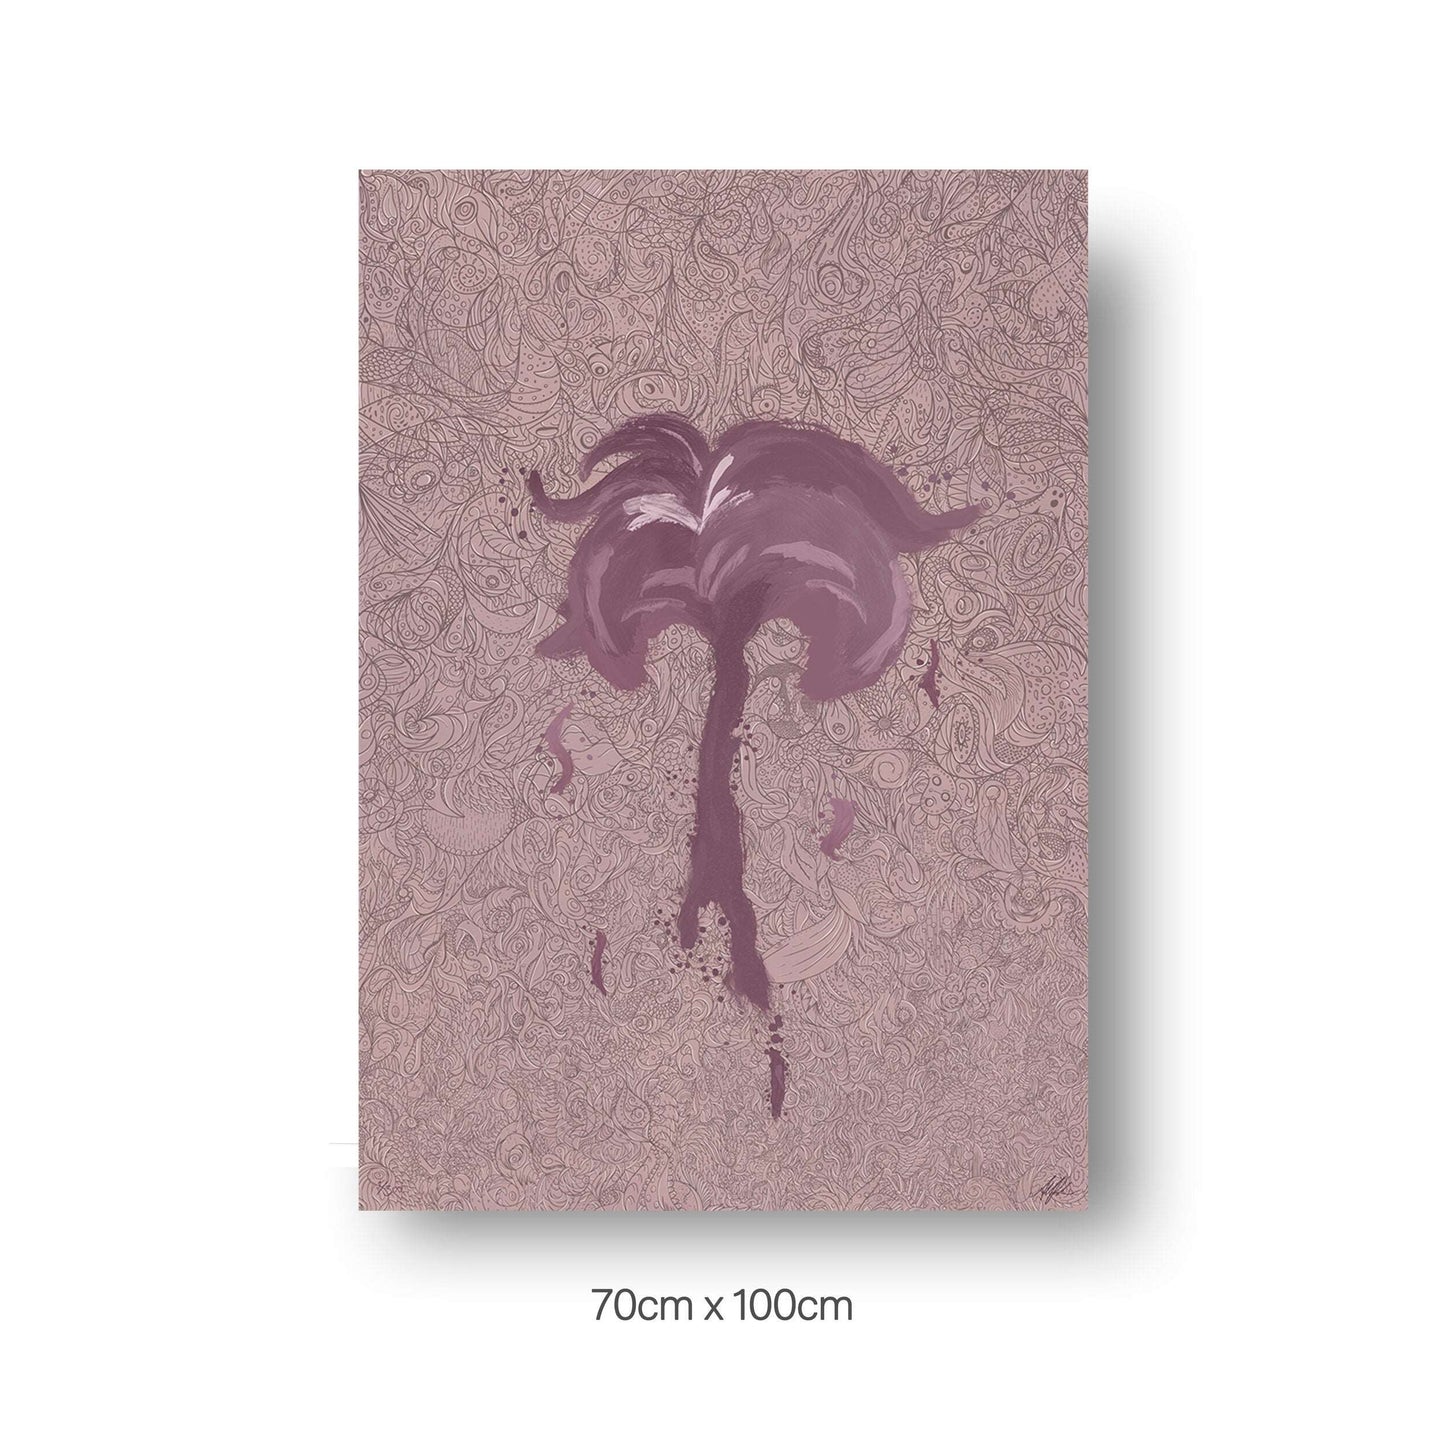 NOKUKO - Art - Alan Pedersen - ALANTHEROCK - Recognition - Listen to myself - limited edition - Purple reflection - 70cmx100cm print